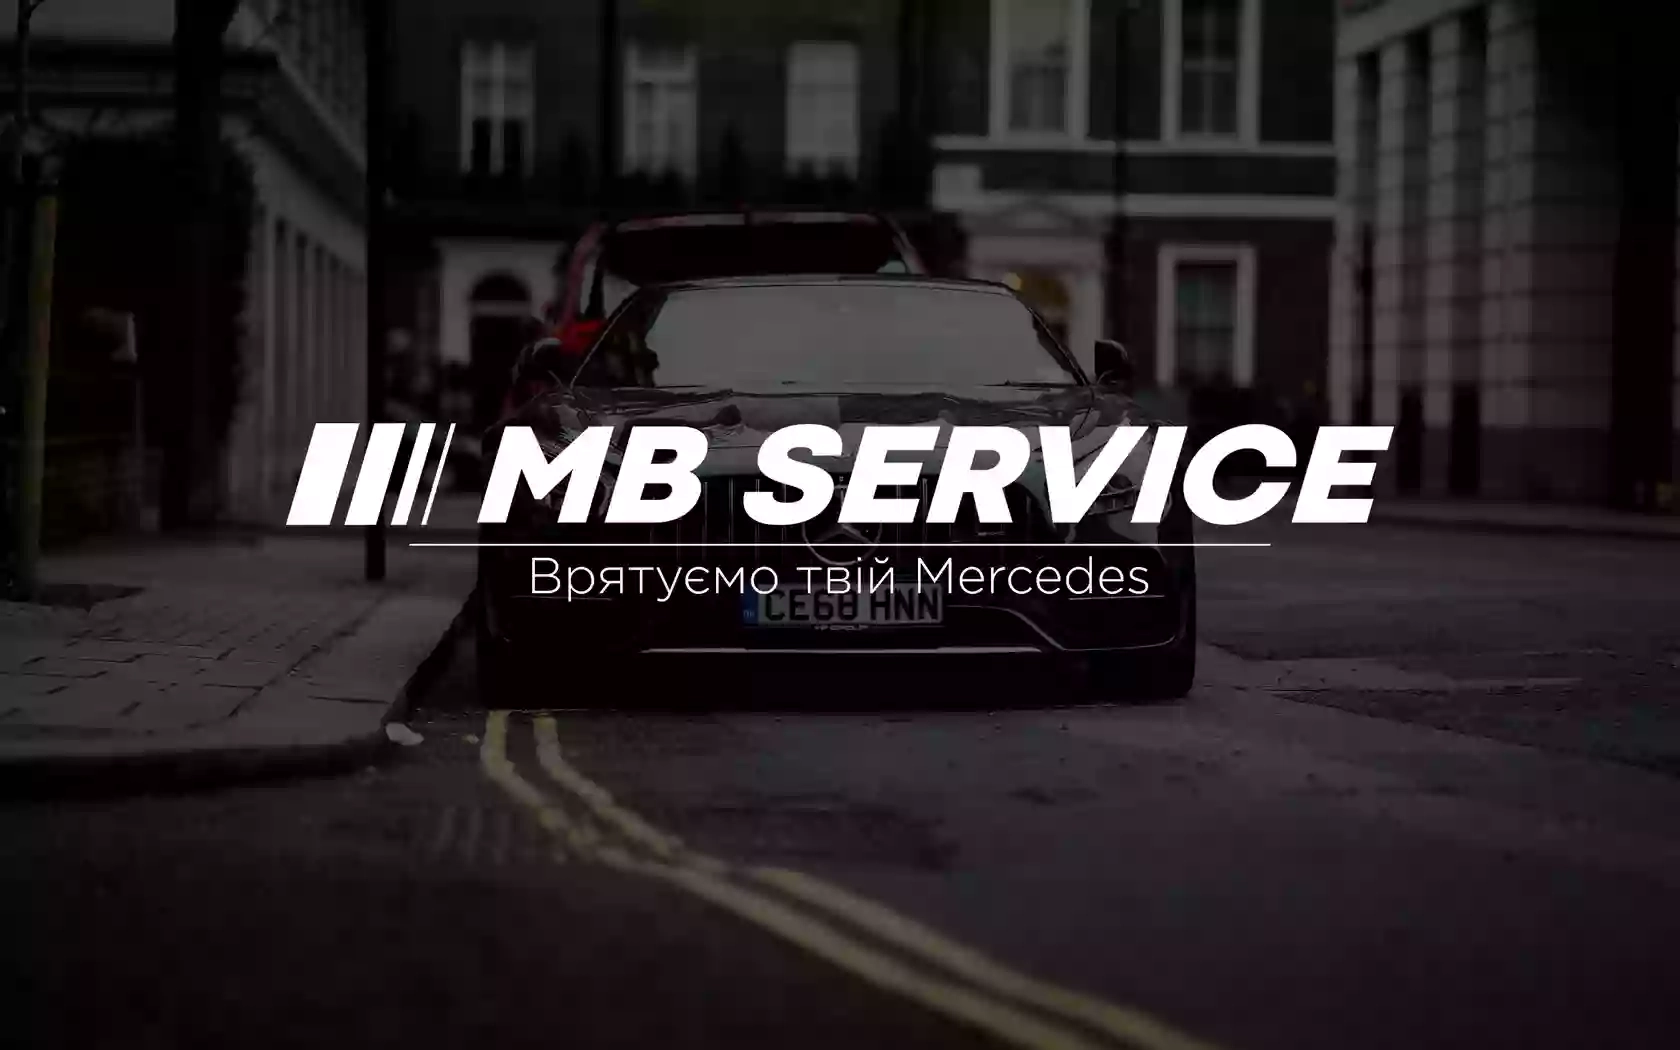 MB SERVICE